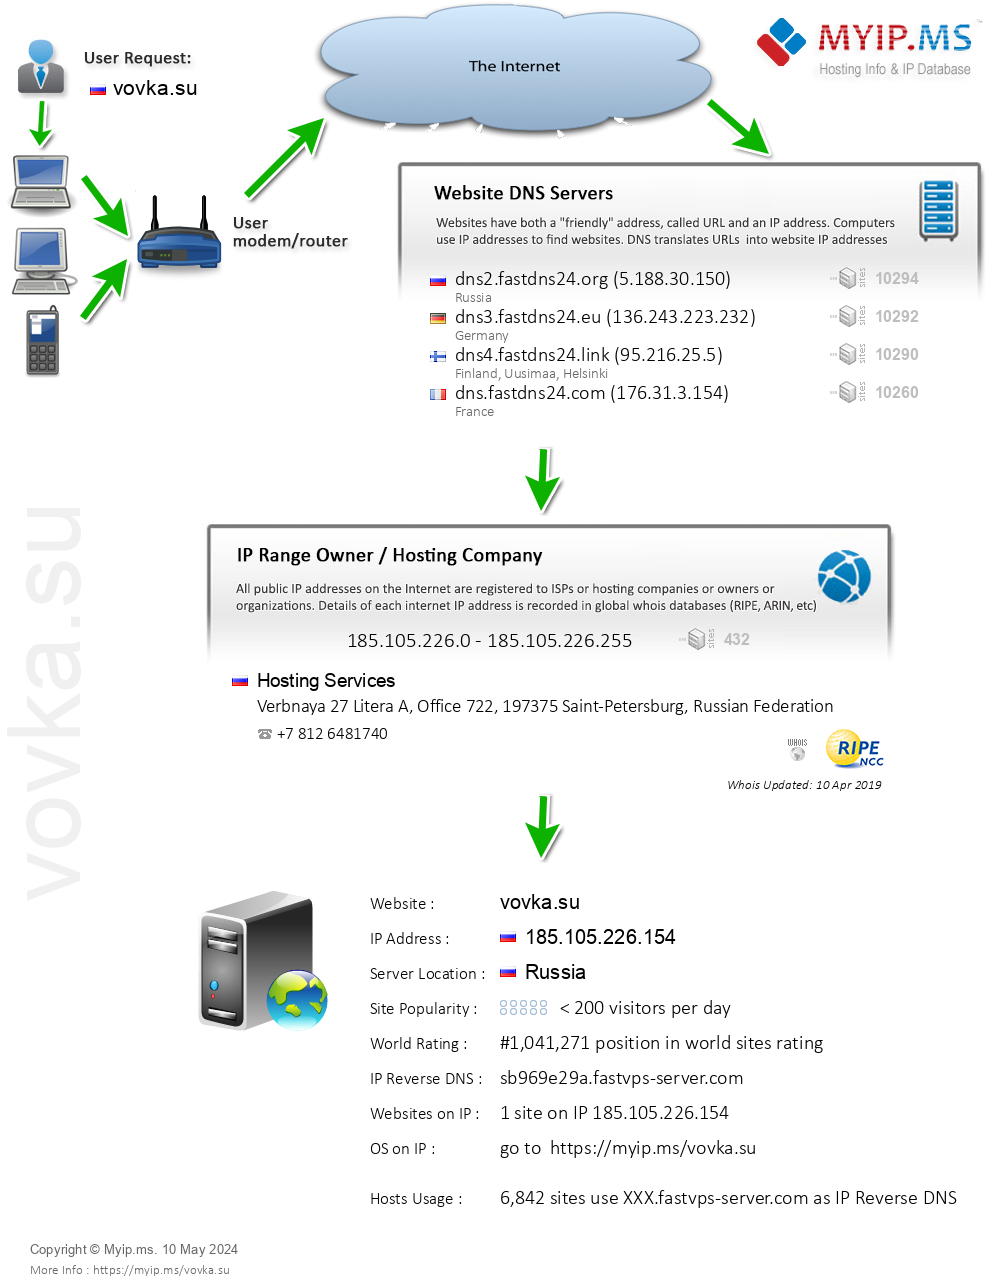 Vovka.su - Website Hosting Visual IP Diagram